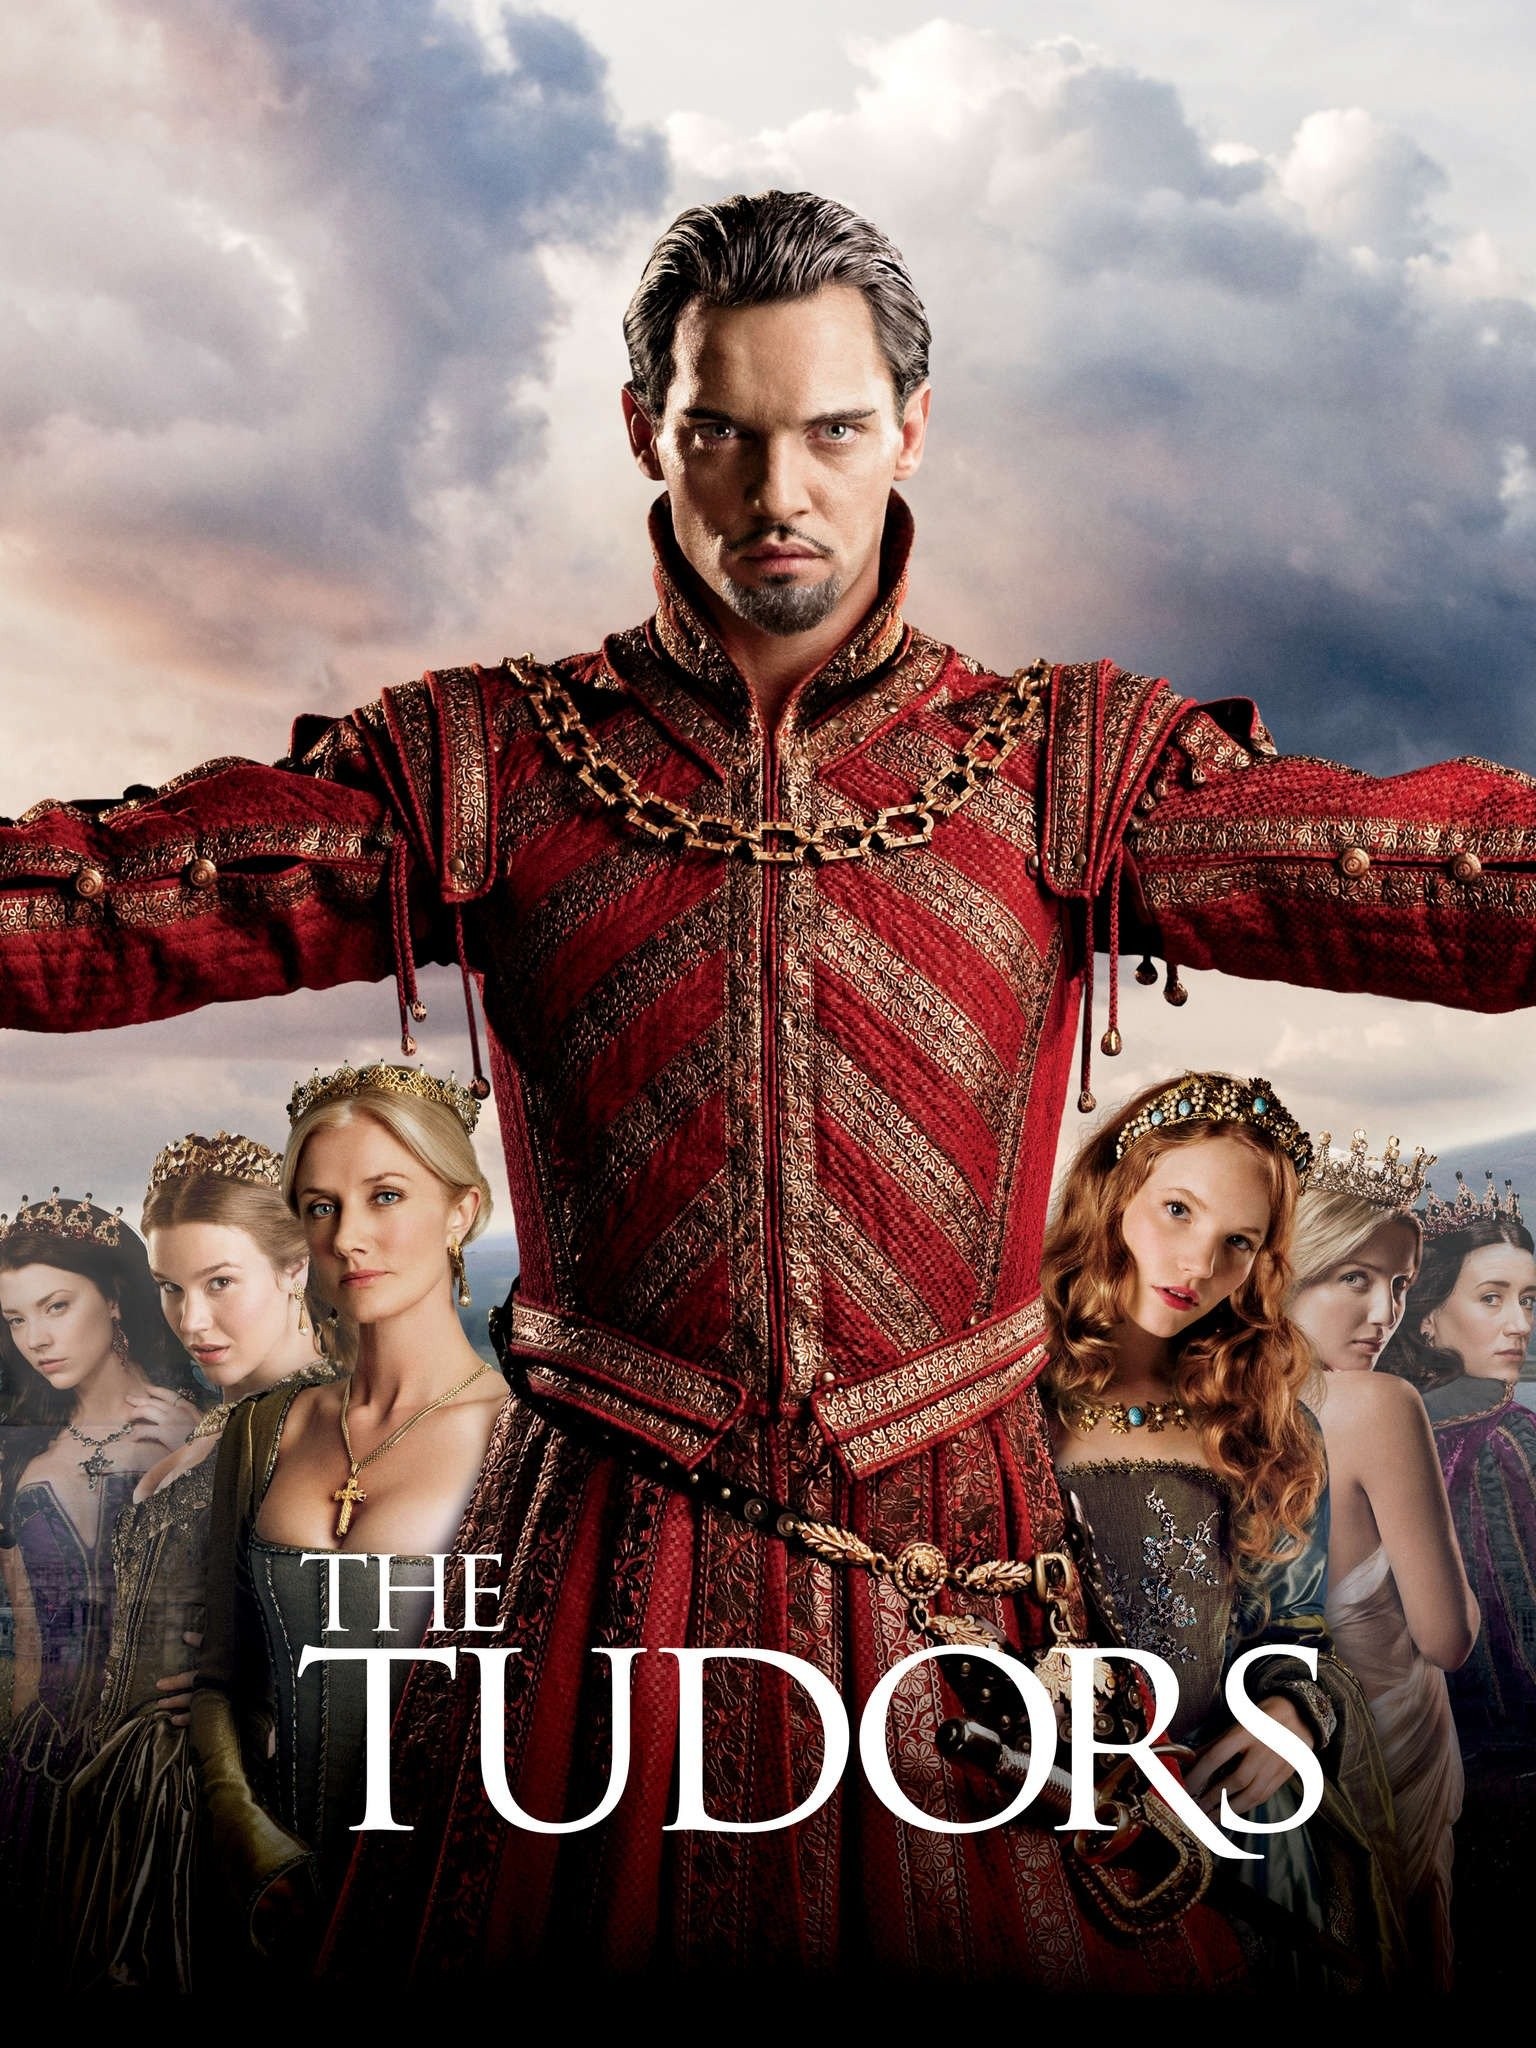 Tudors S4 Comp Final Season [DVD] [Import]